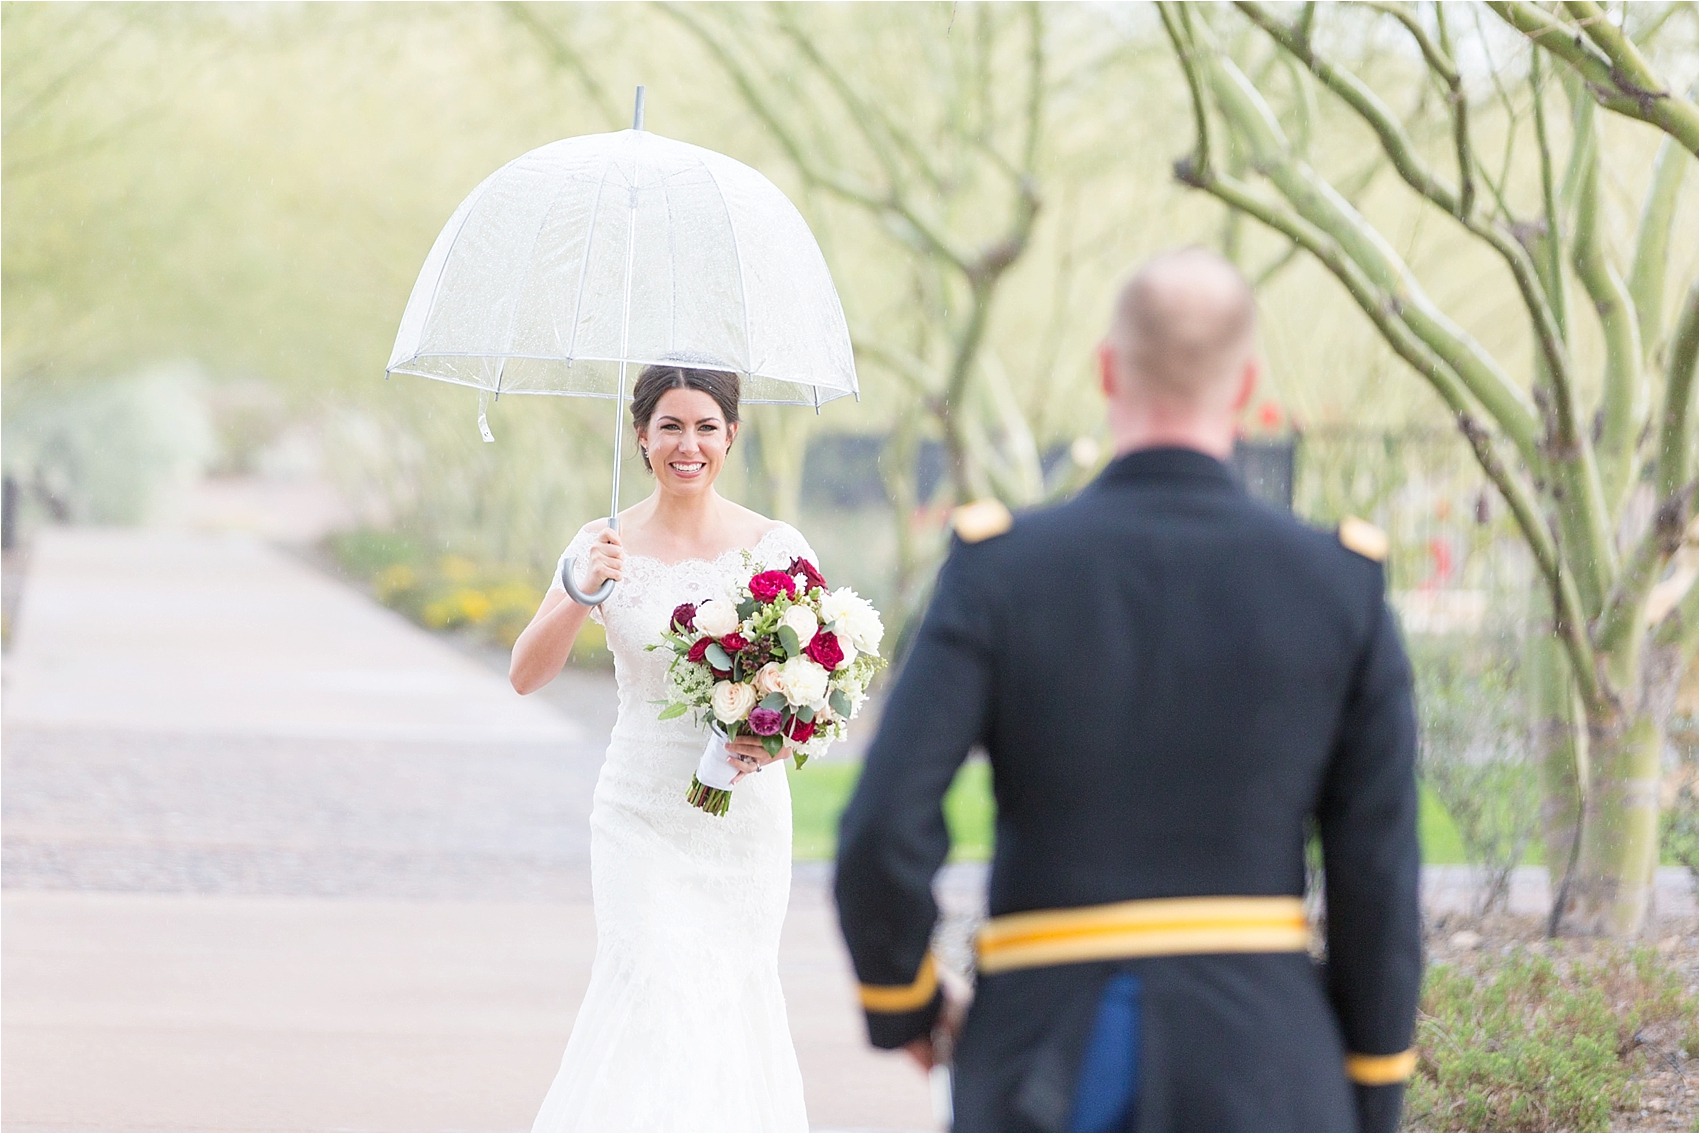 7 Tips for Shooting Weddings in the Rain